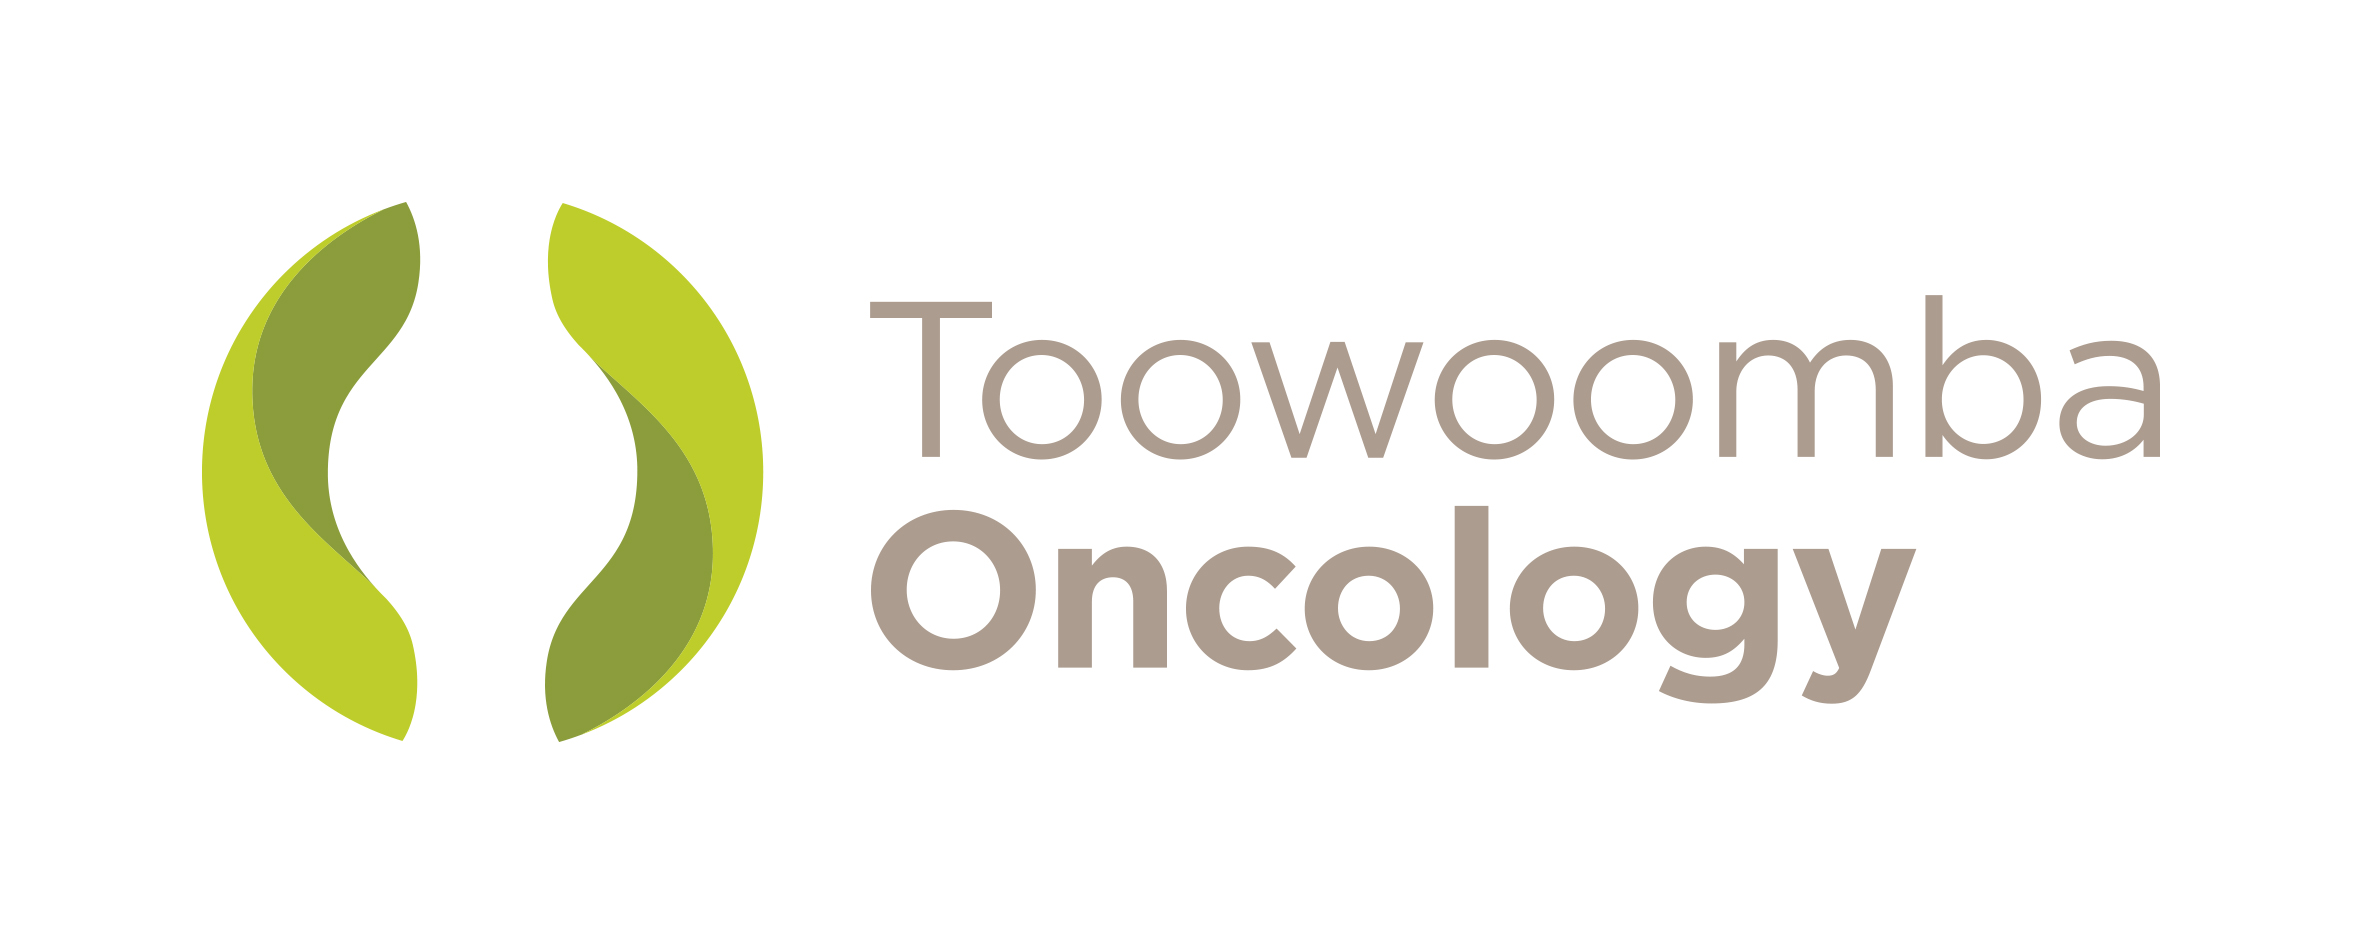 Toowoomba Oncology Logo RGB HiRes.jpg